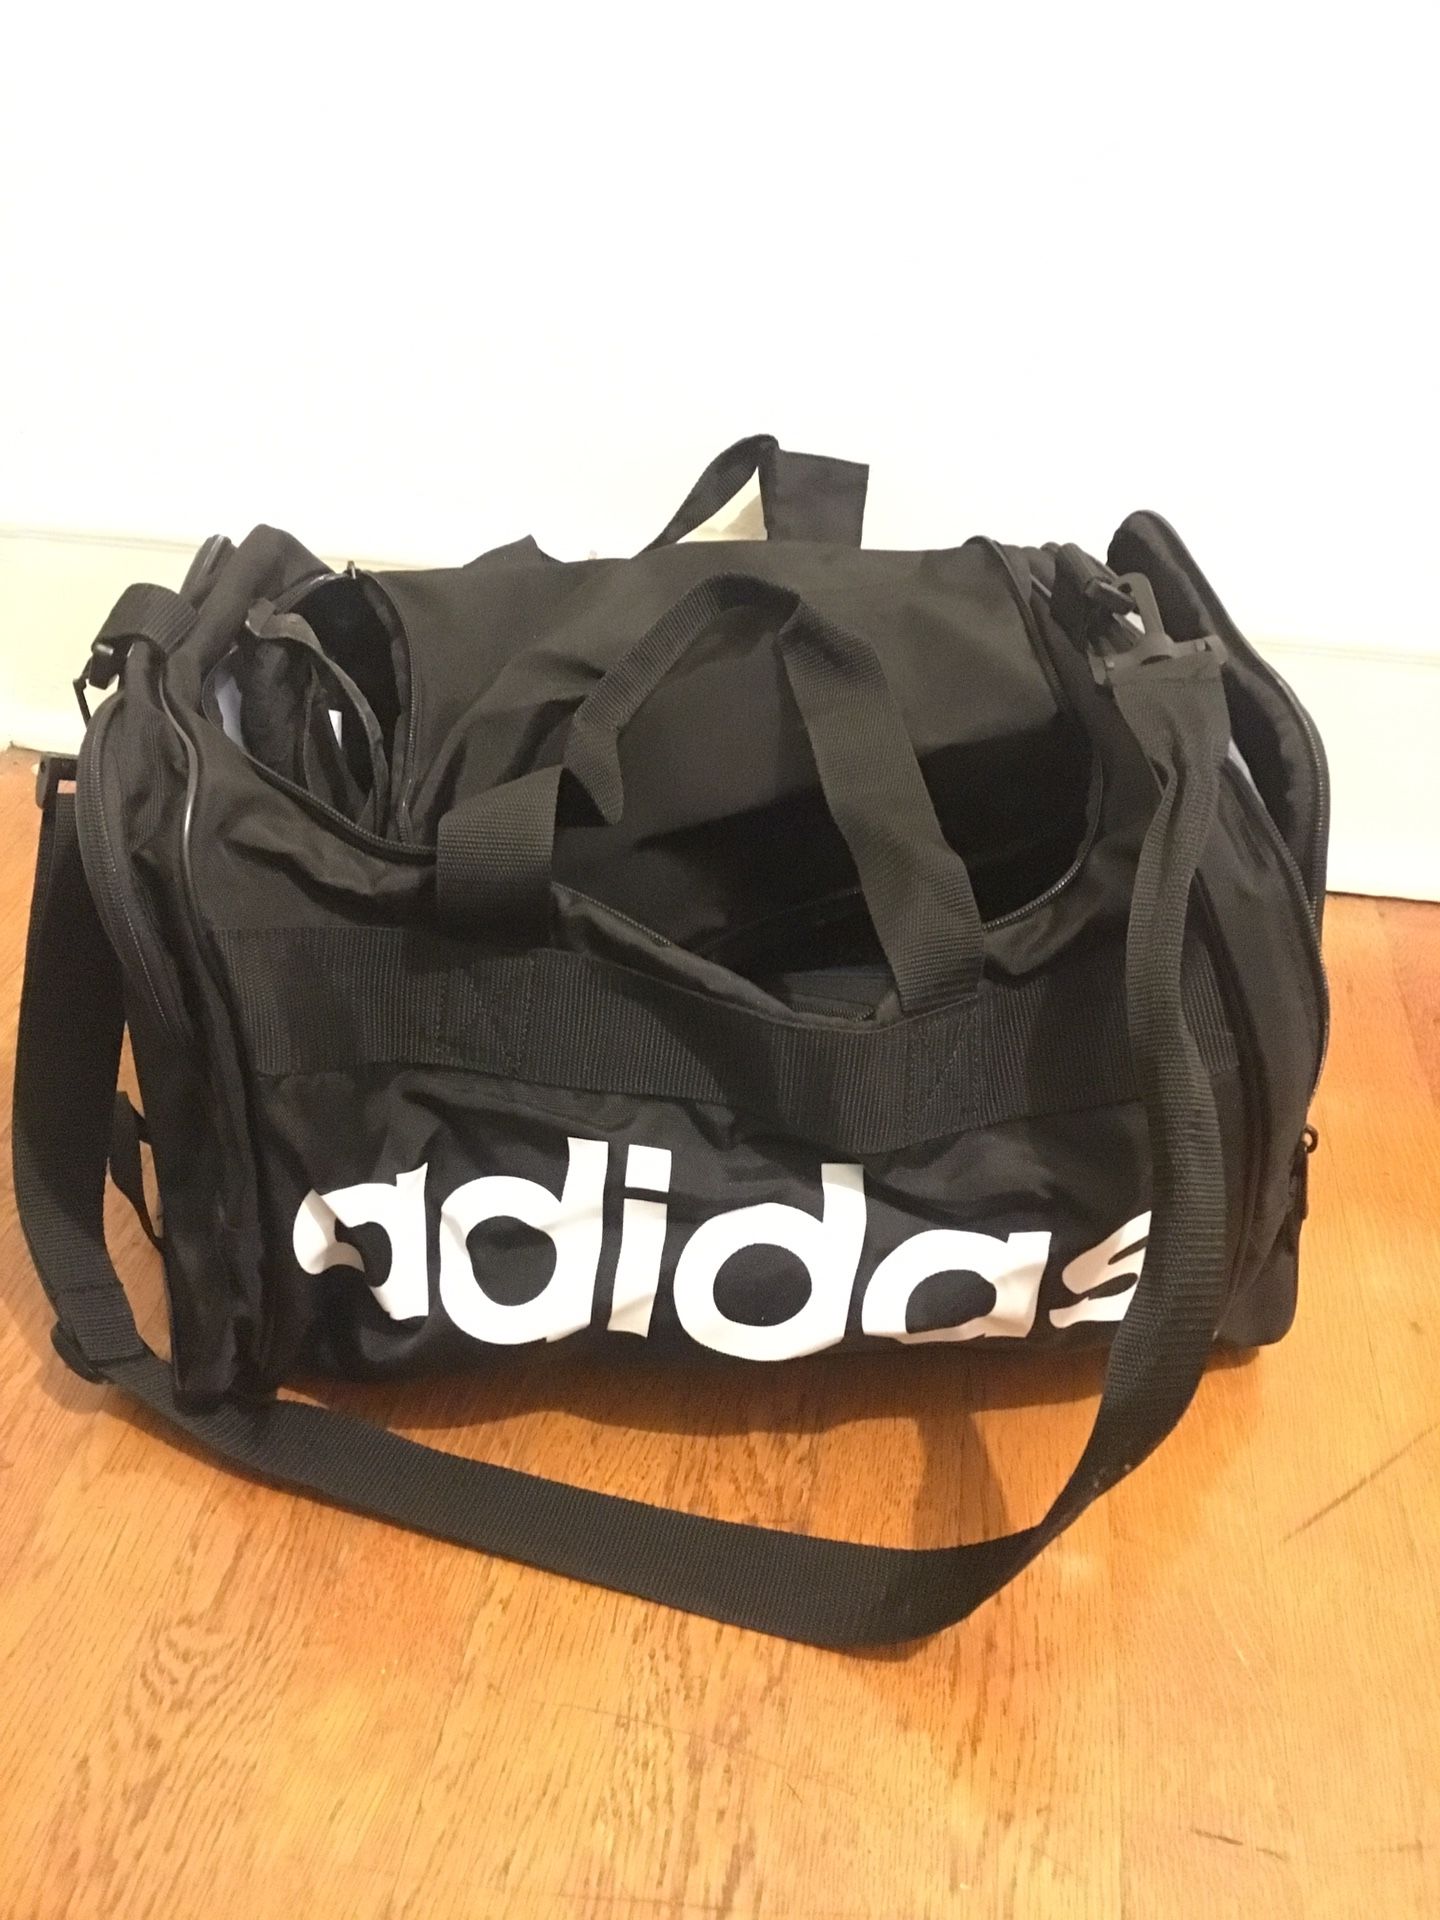 Brand new Adidas gym bag